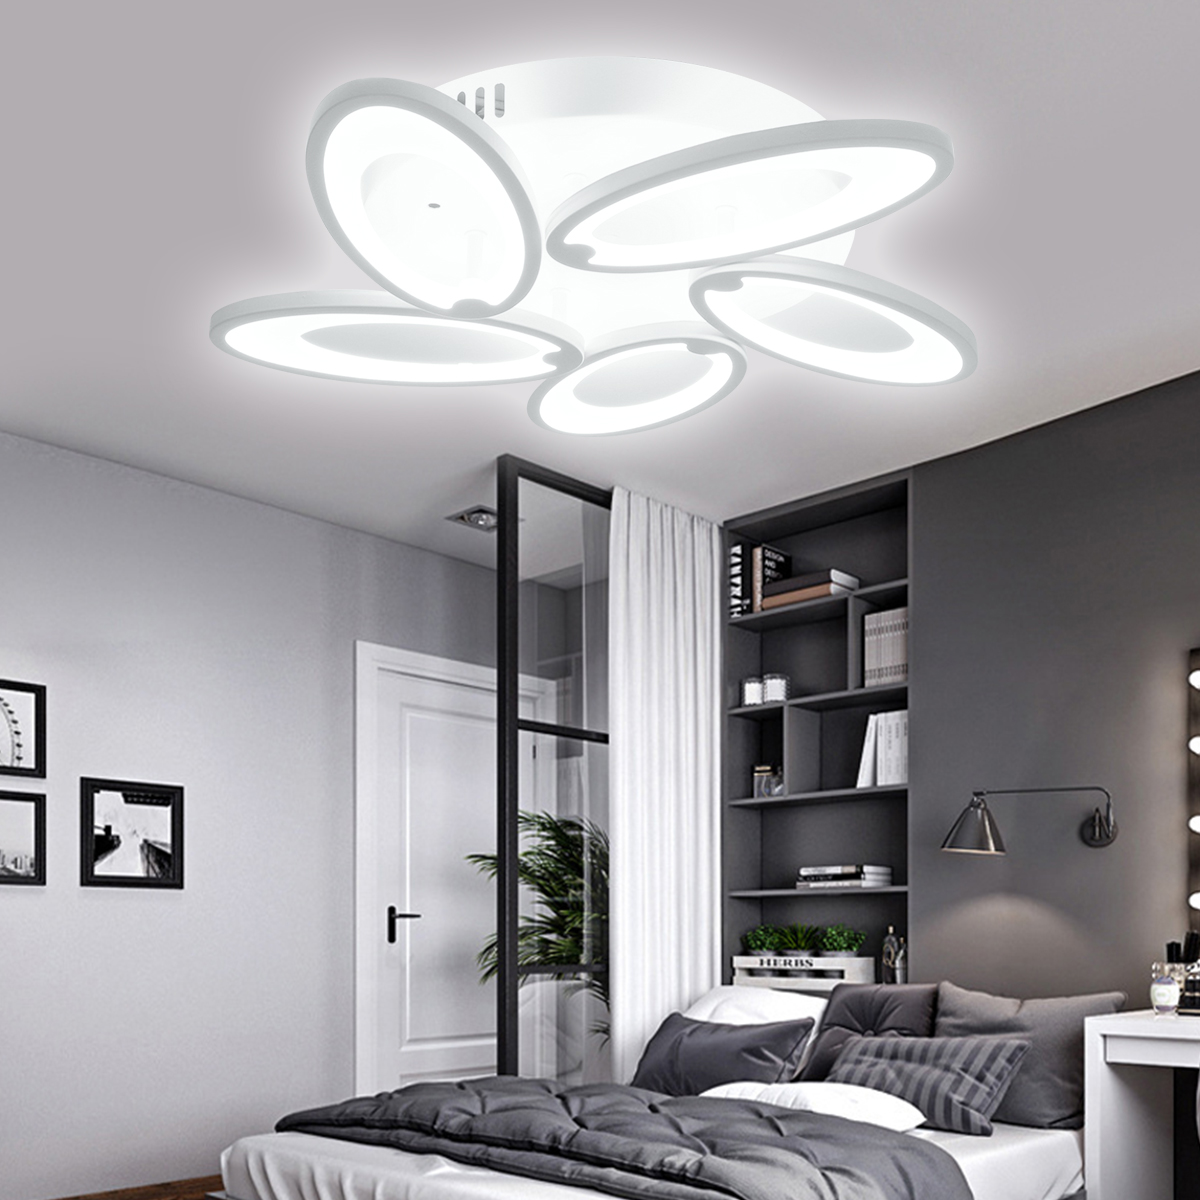 5-Heads-Modern-LED-Ceiling-Acrylic-Home-Lights-Home-Chandelier-LampRemote-3200-6500K-1793901-2